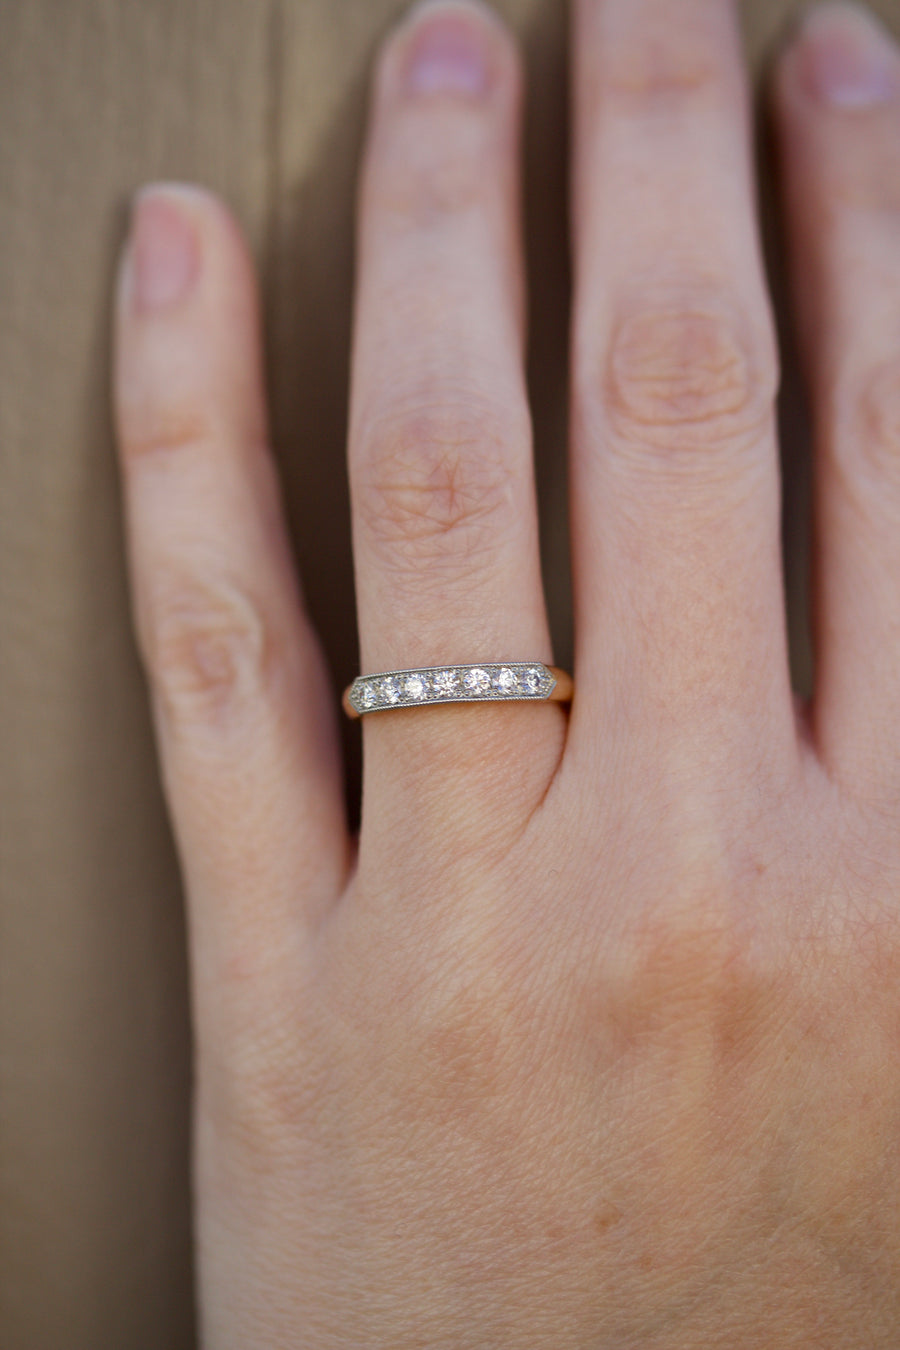 Platinum Overlay Diamond Wedding Ring